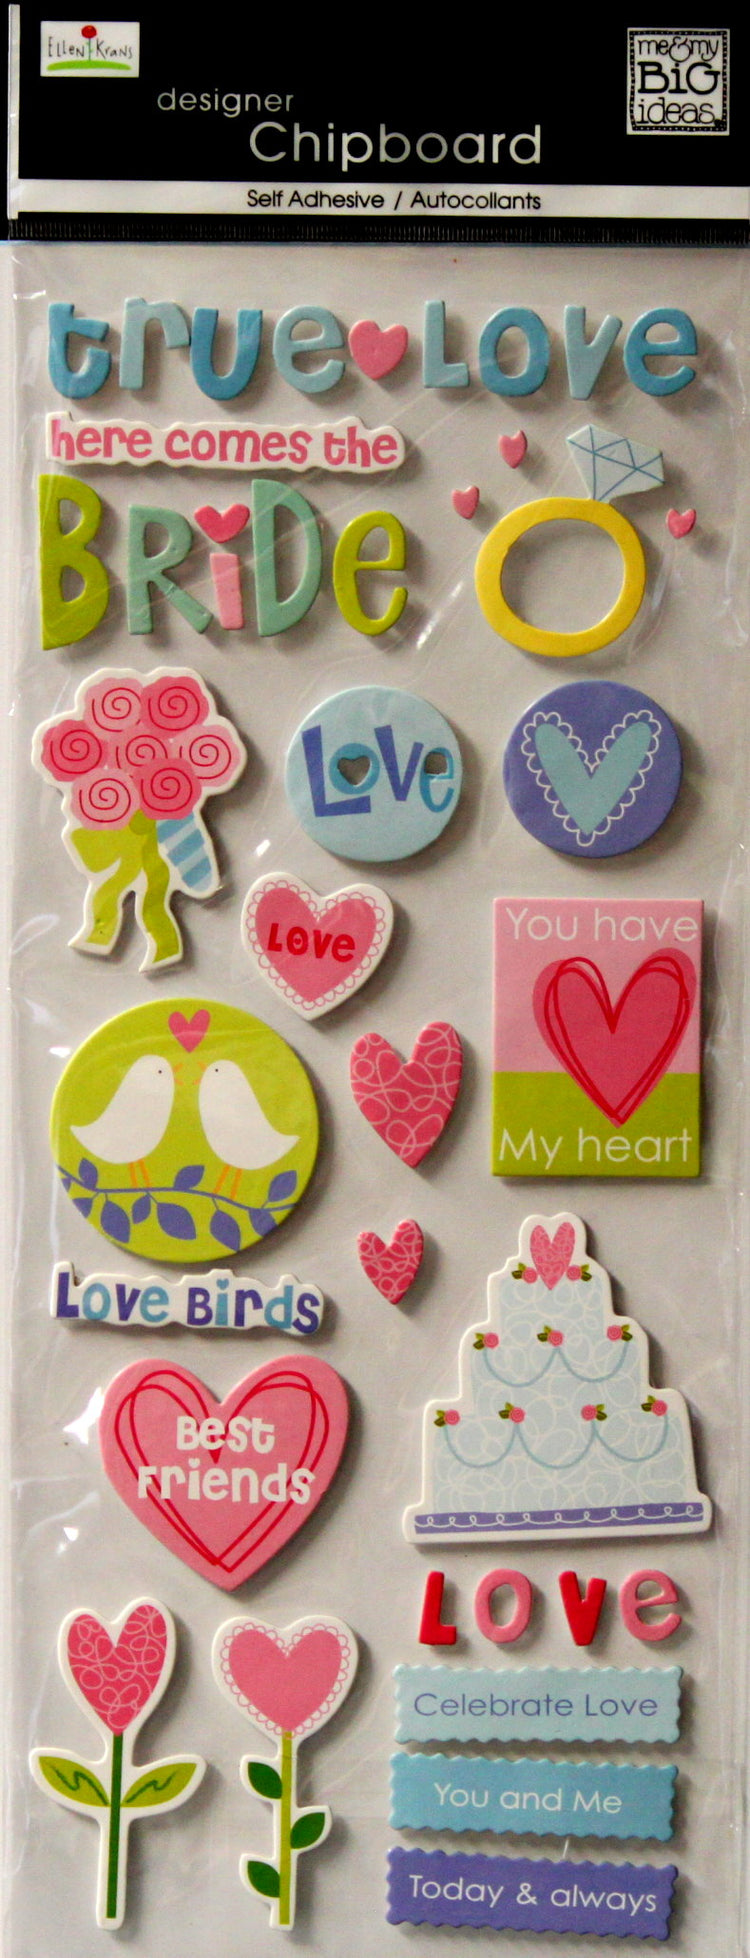 Me & My Big Ideas Ellen Krans Designer Chipboard Bride Stickers Embellishments